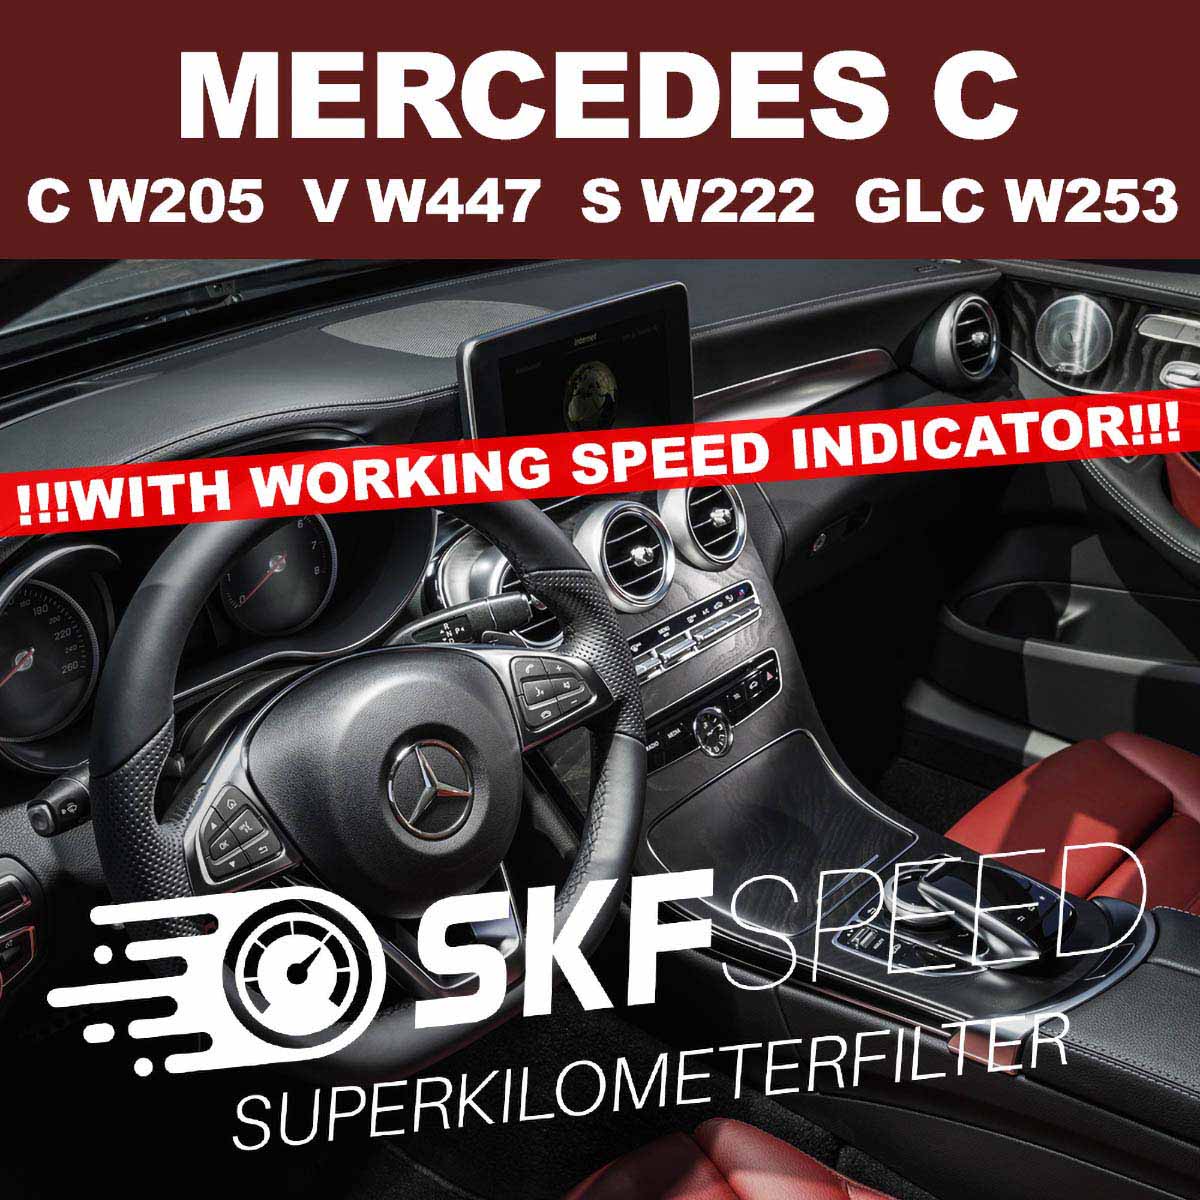 Mileage blocker for Mercedes GLC W253